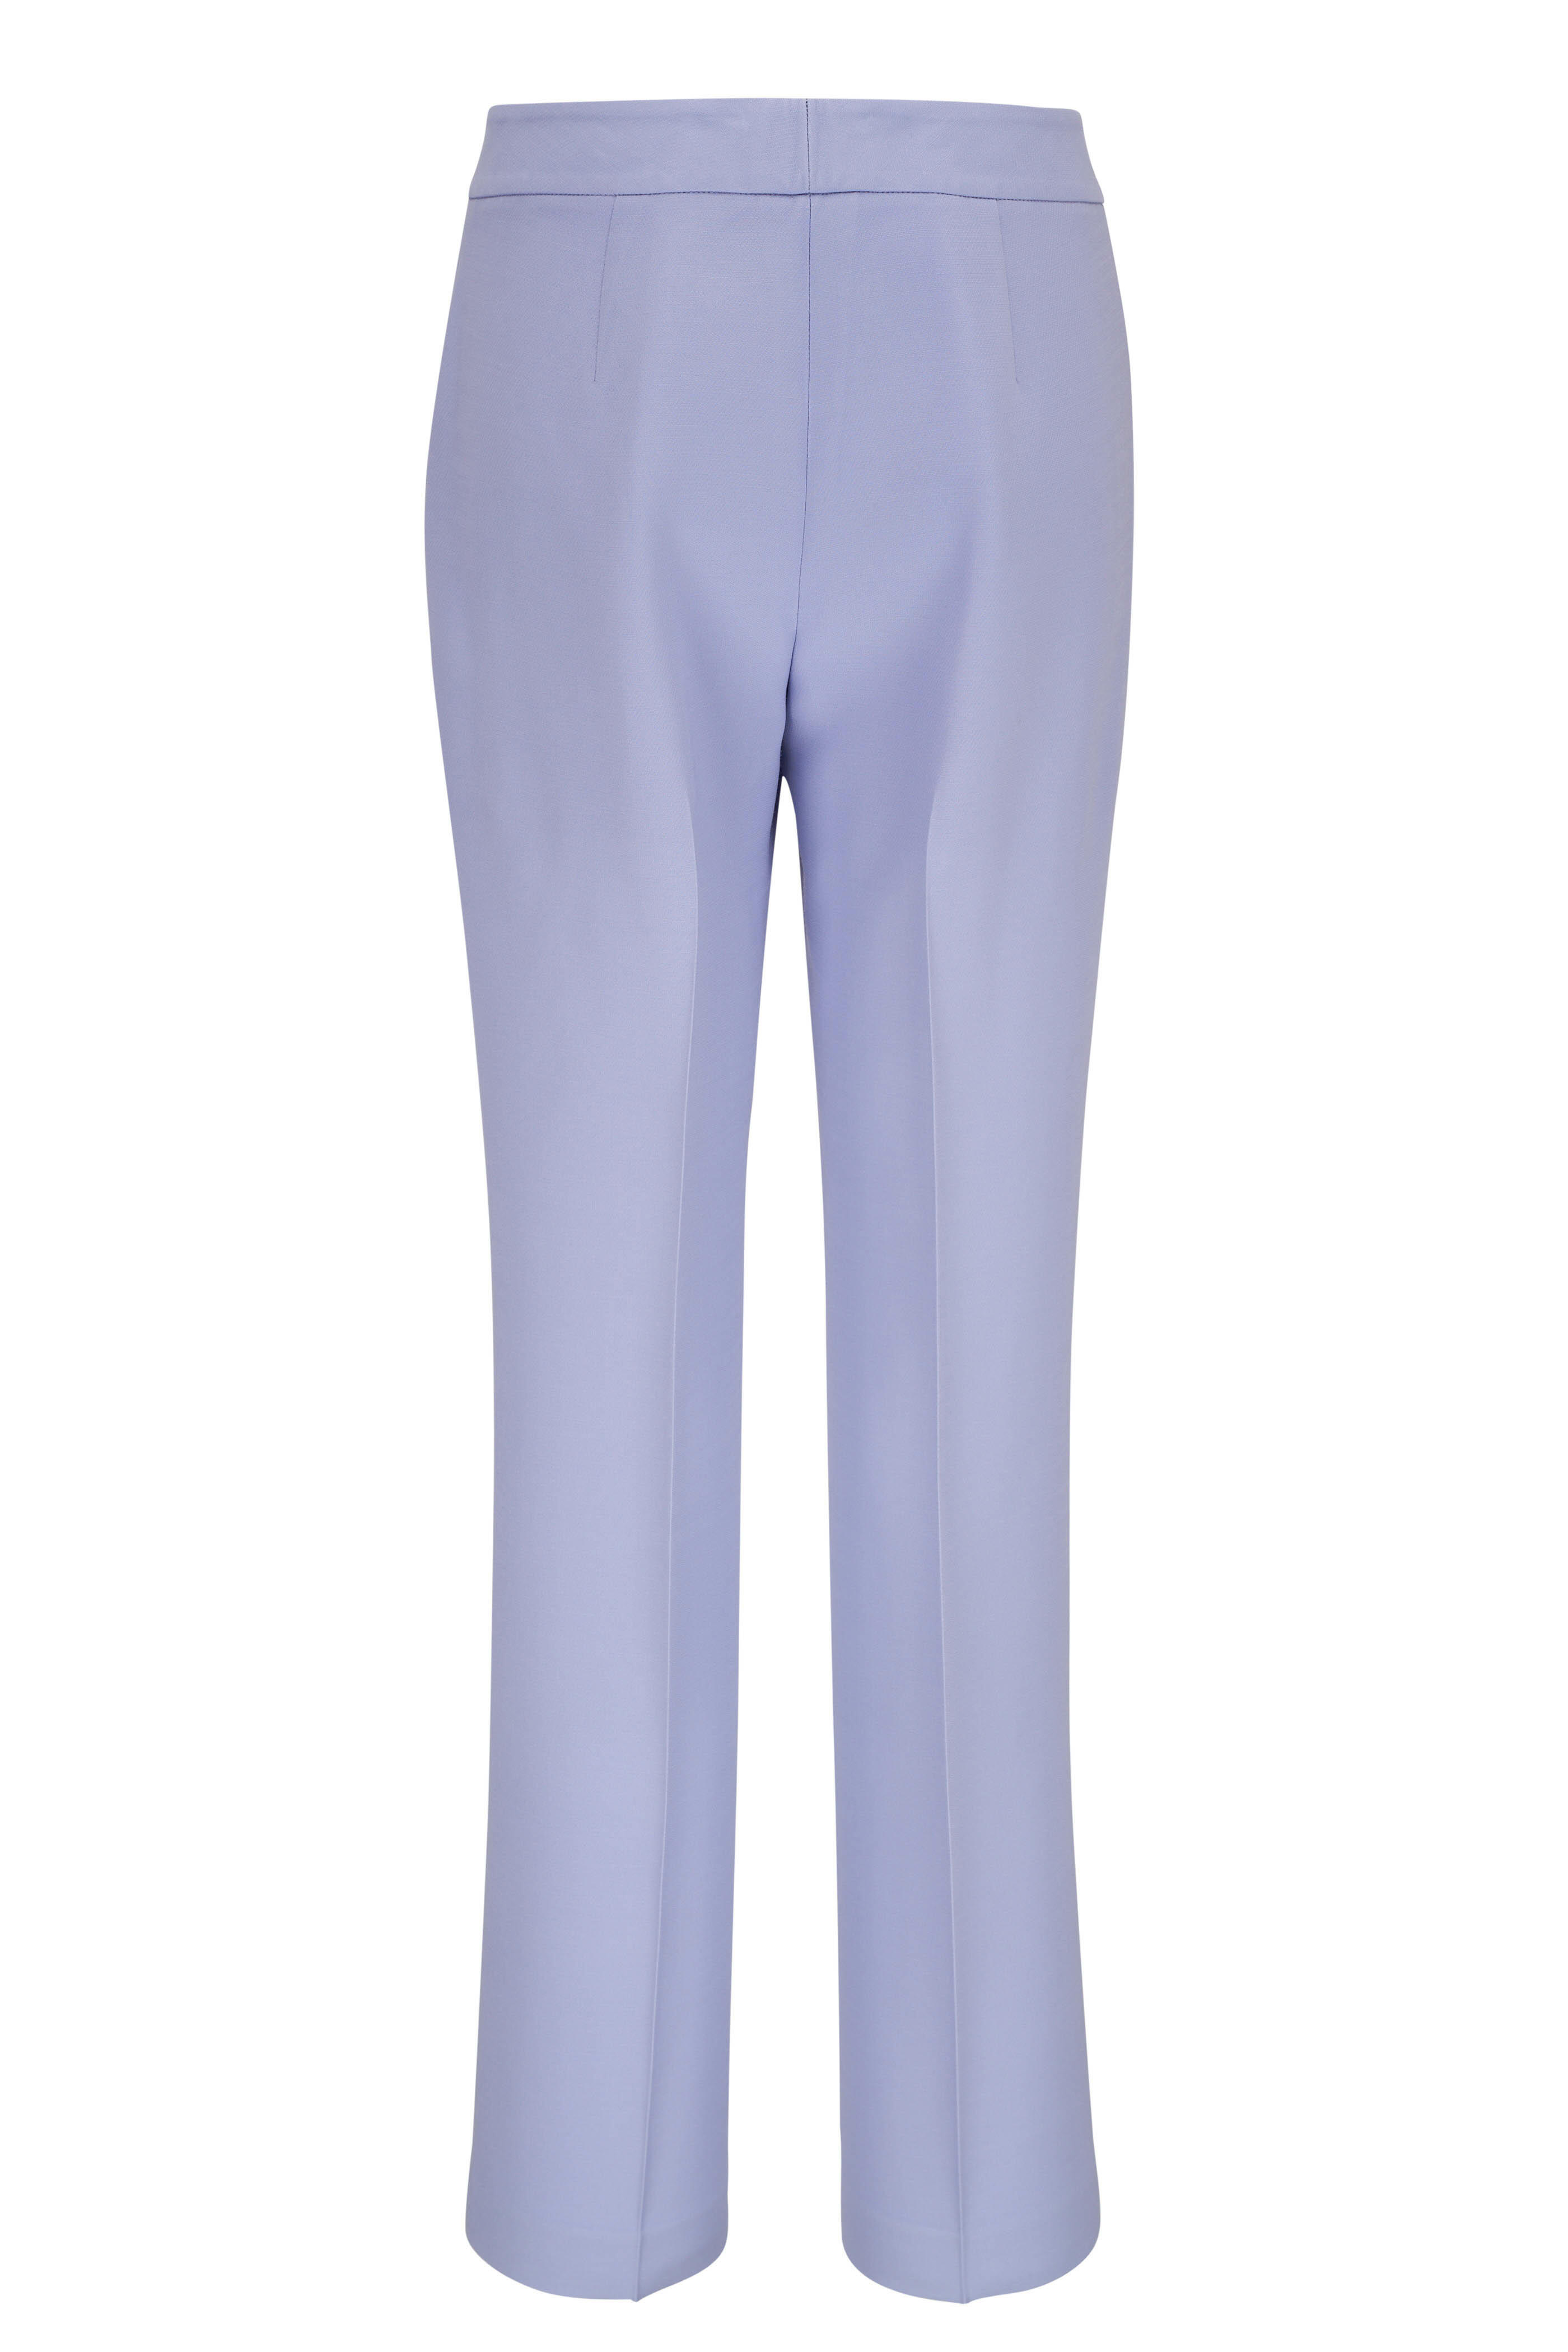 Lafayette 148 New York Blue Gray Light Weight Wool Menswear Pants sz 8